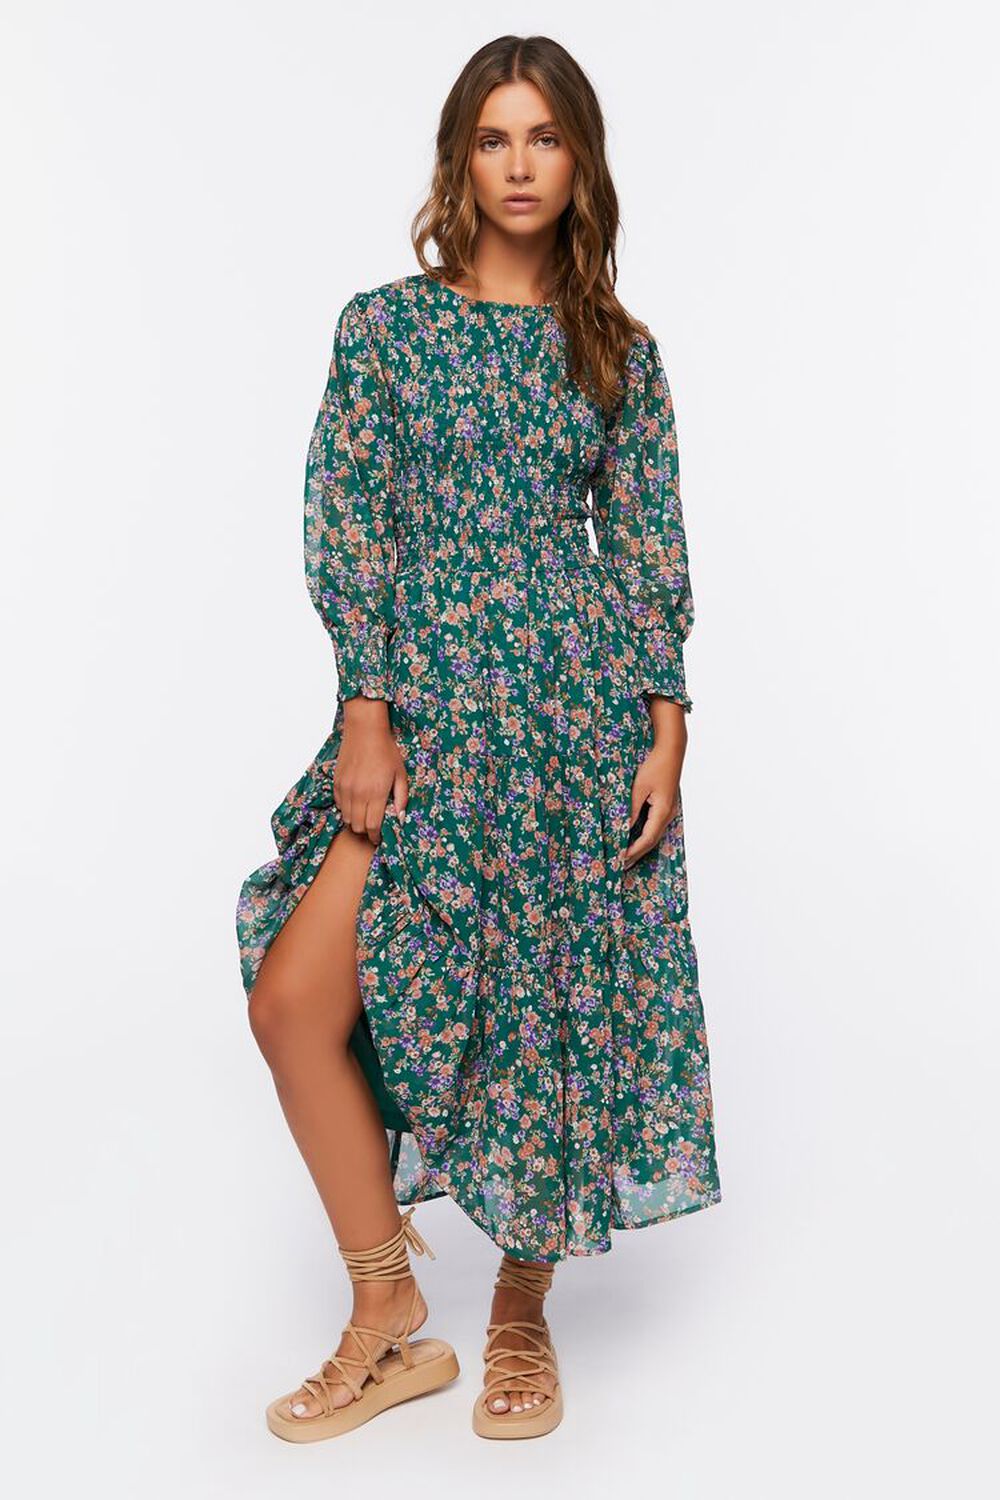 DARK GREEN/MULTI Floral Print Midi Dress, image 1